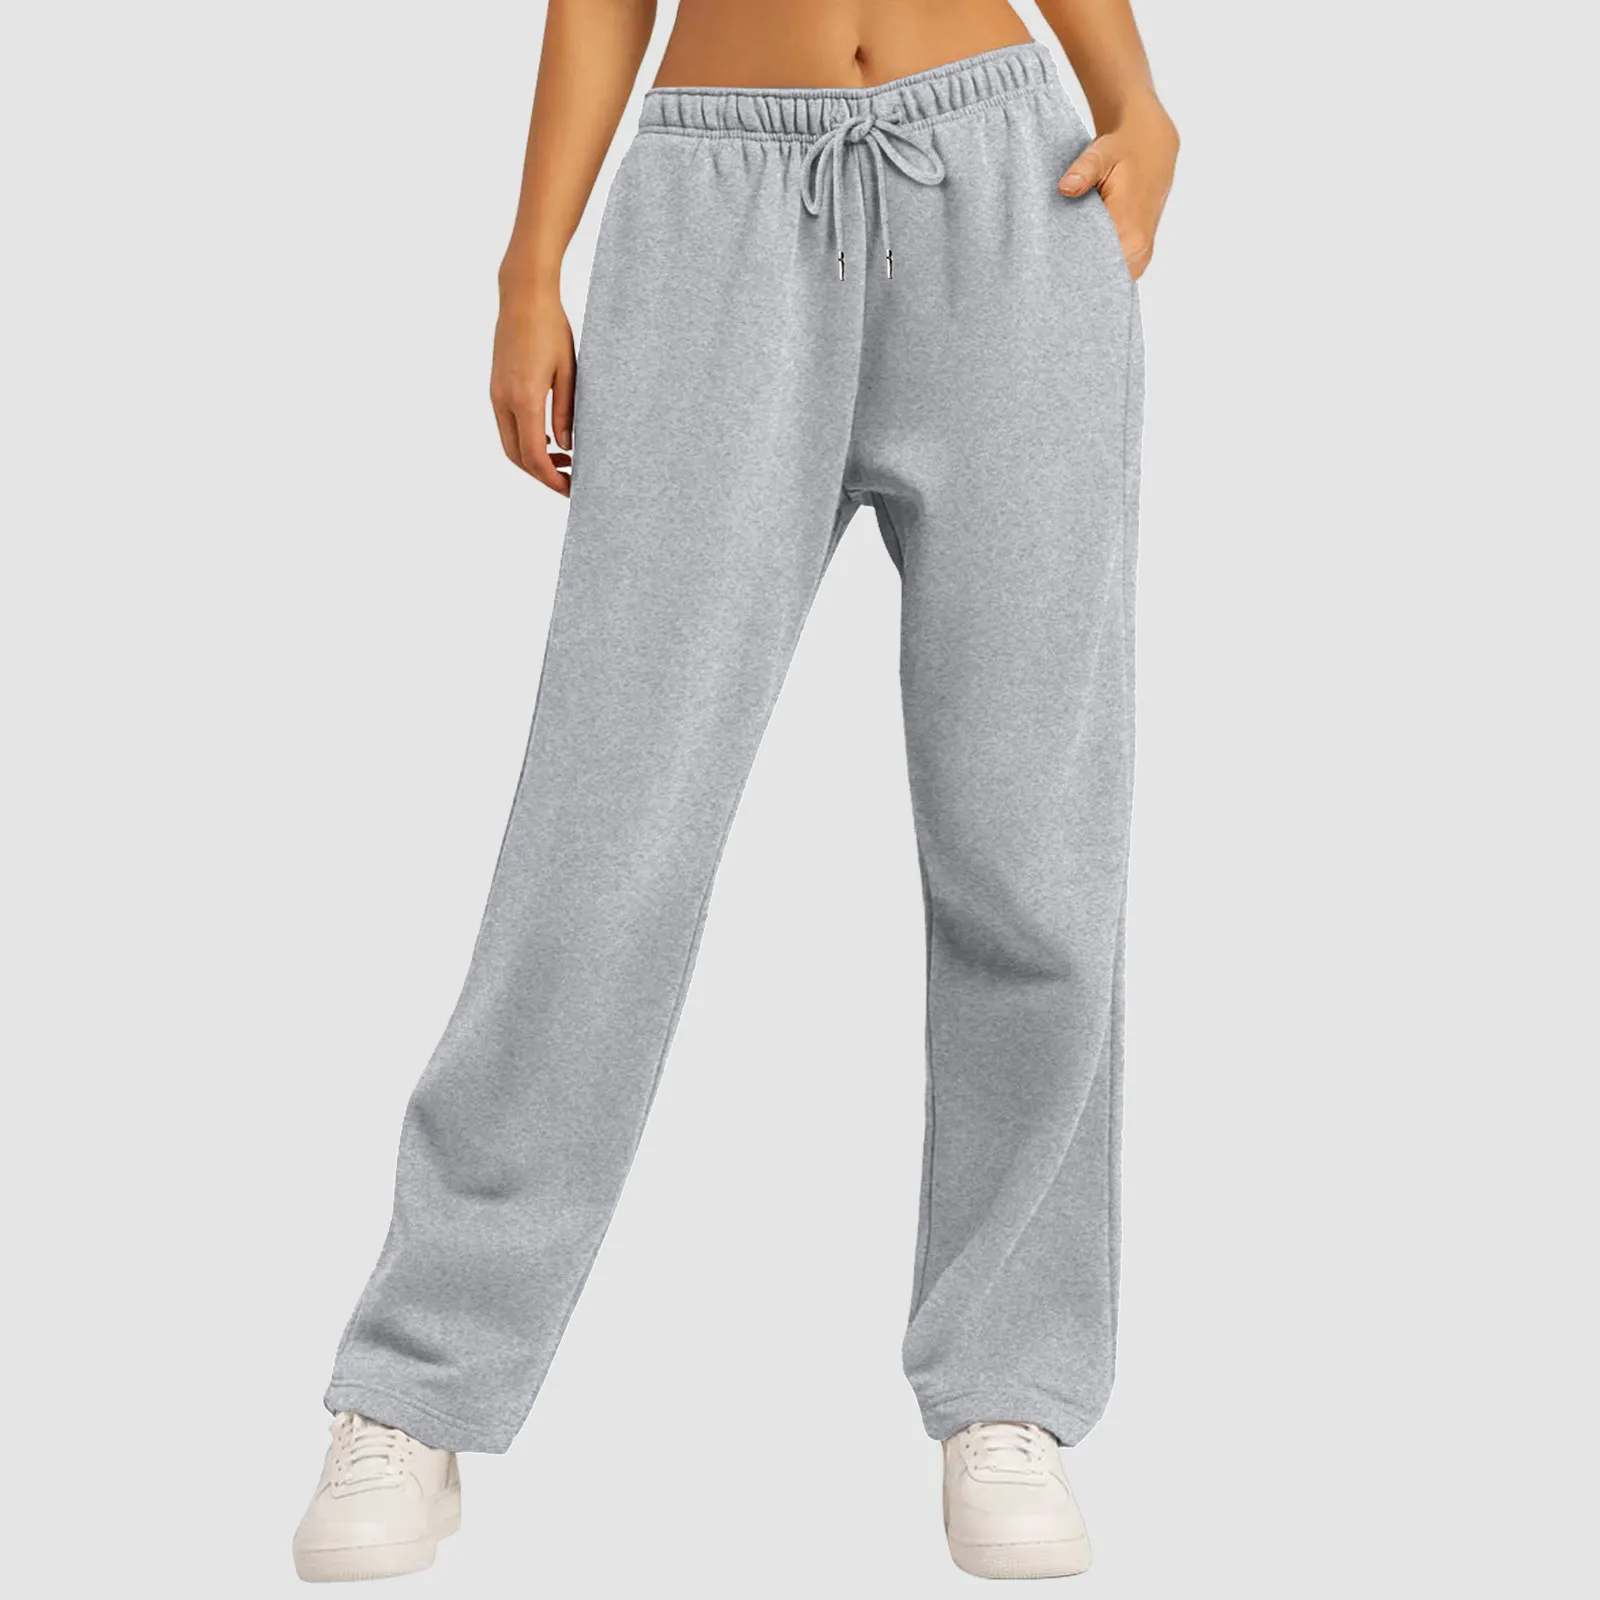 Women's Fleece Lined Sweatpants Straight Pants Bottom All-Math Plain Fitness Joggers Pants Travel Basic